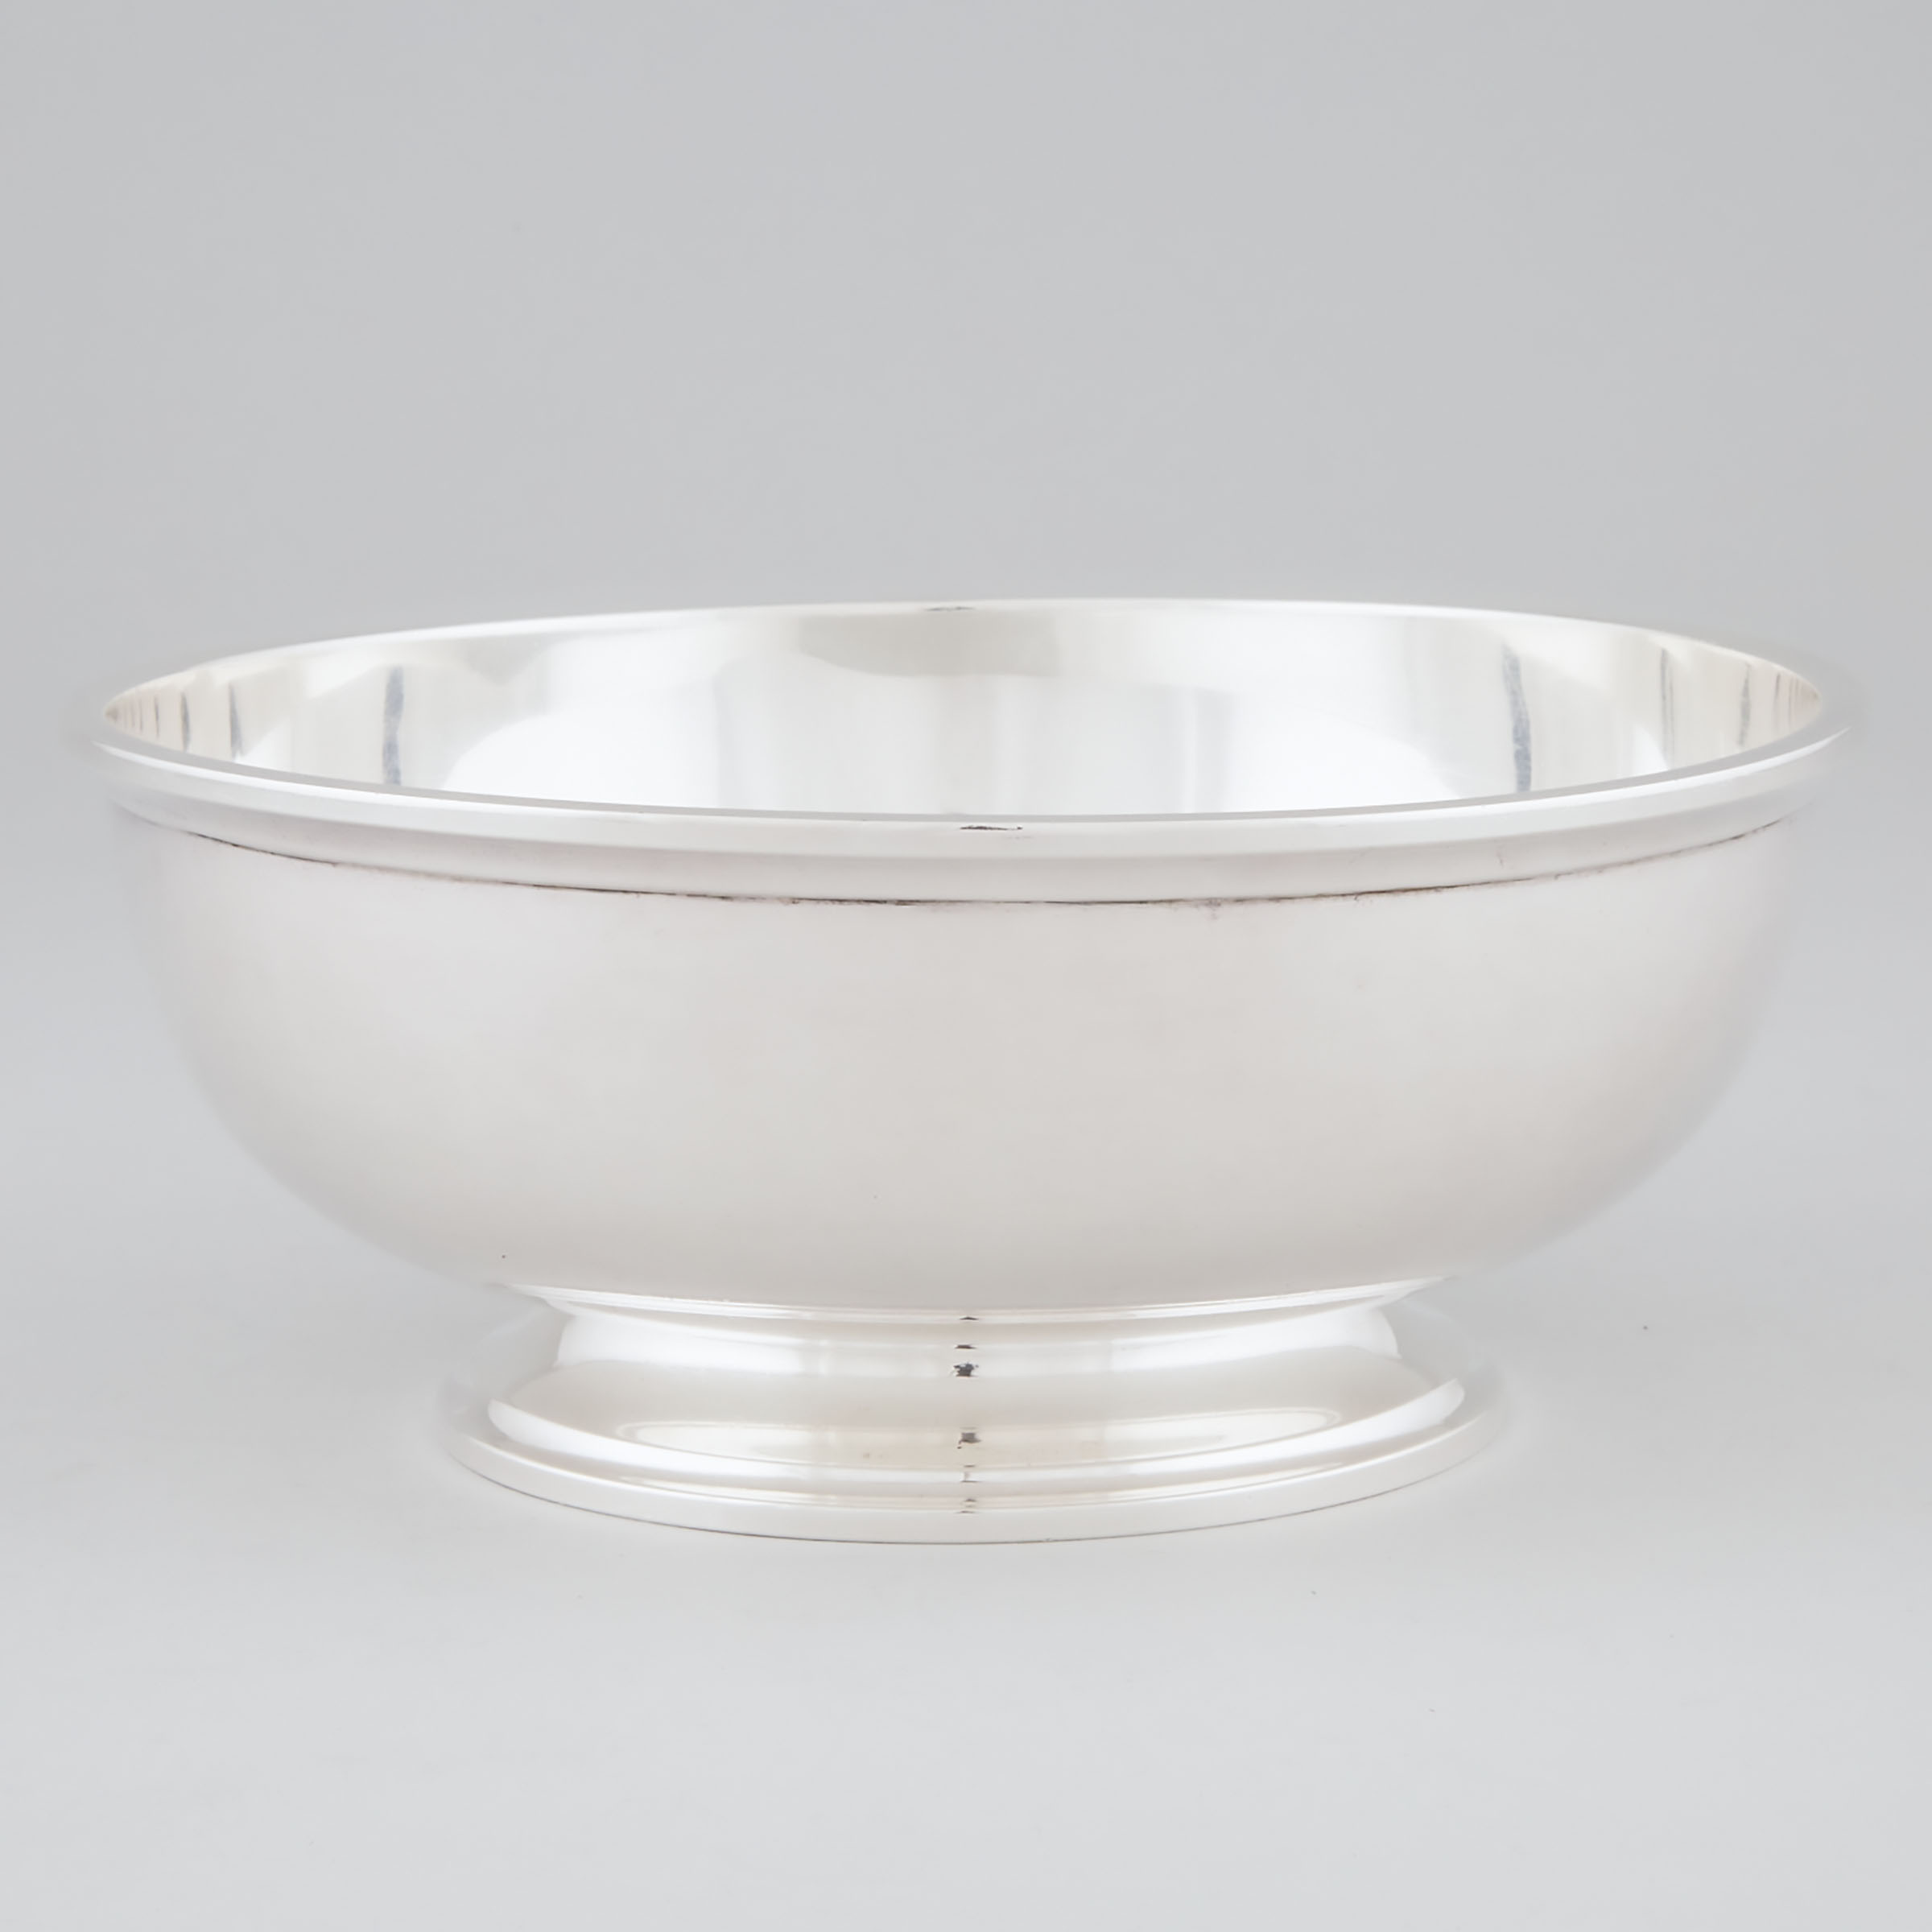 American Silver Bowl, Gorham Mfg. Co., Providence, R.I., 20th century